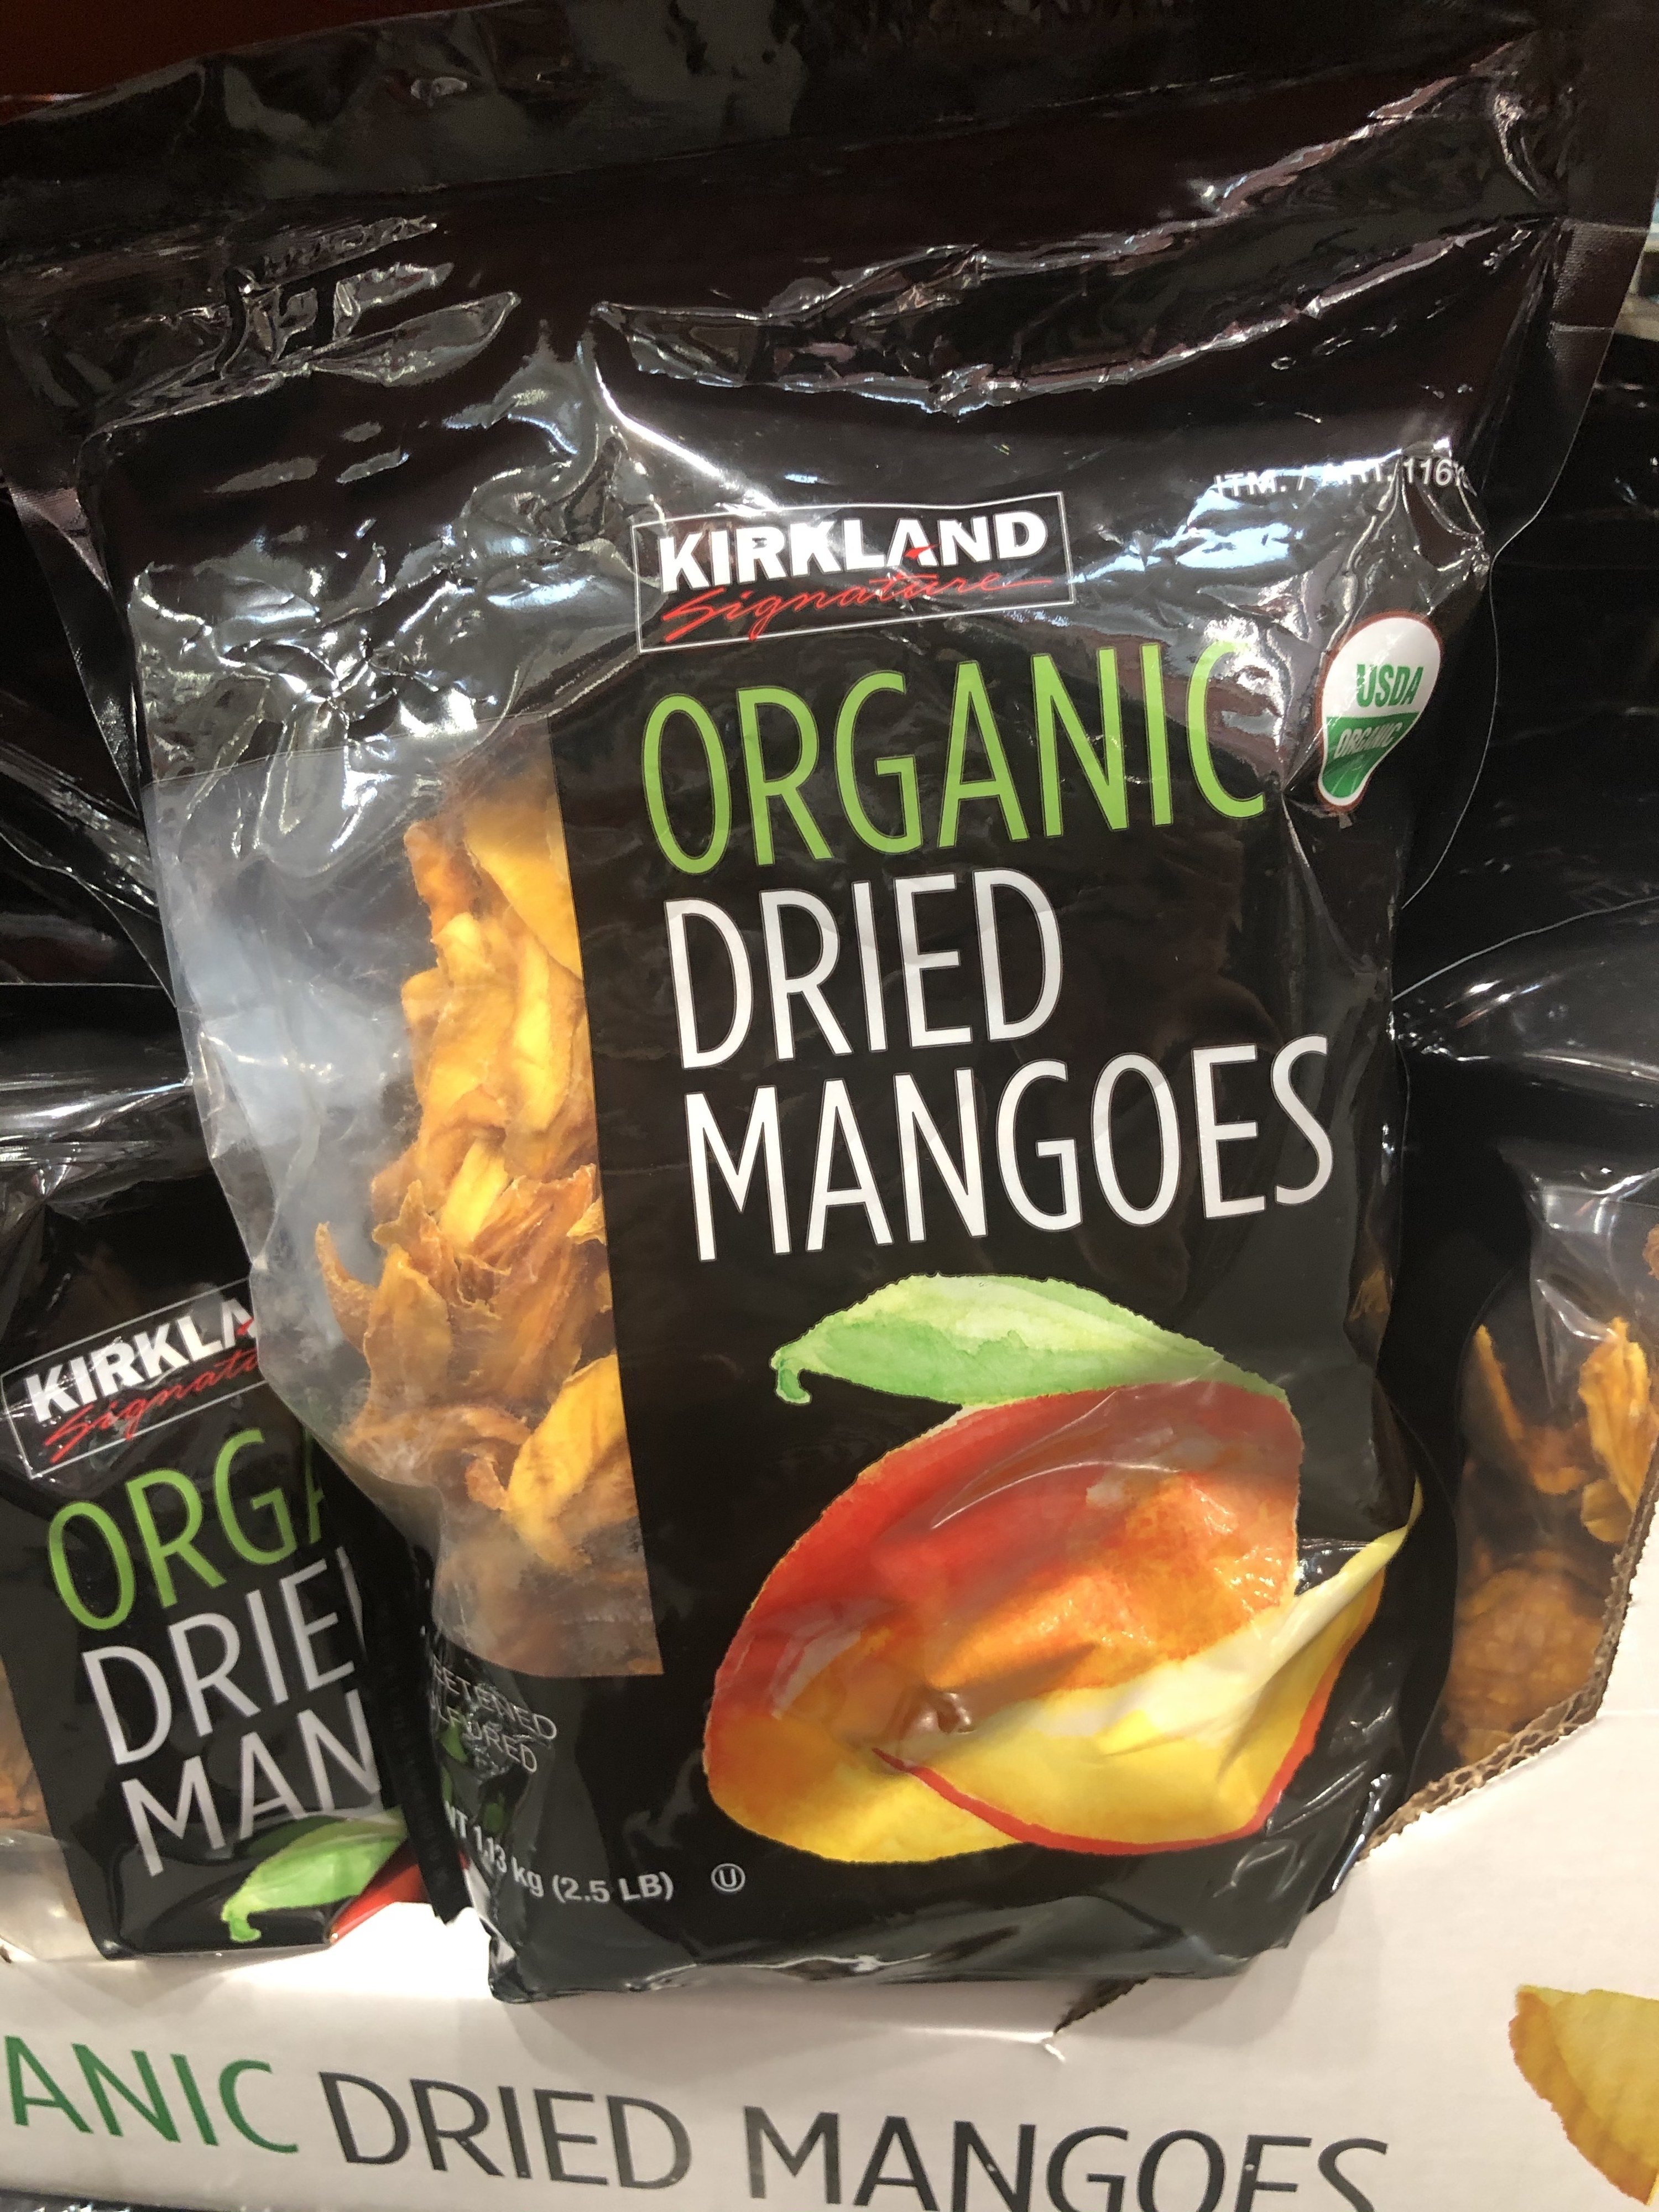 A bag of Kirkland organic dried mangoes